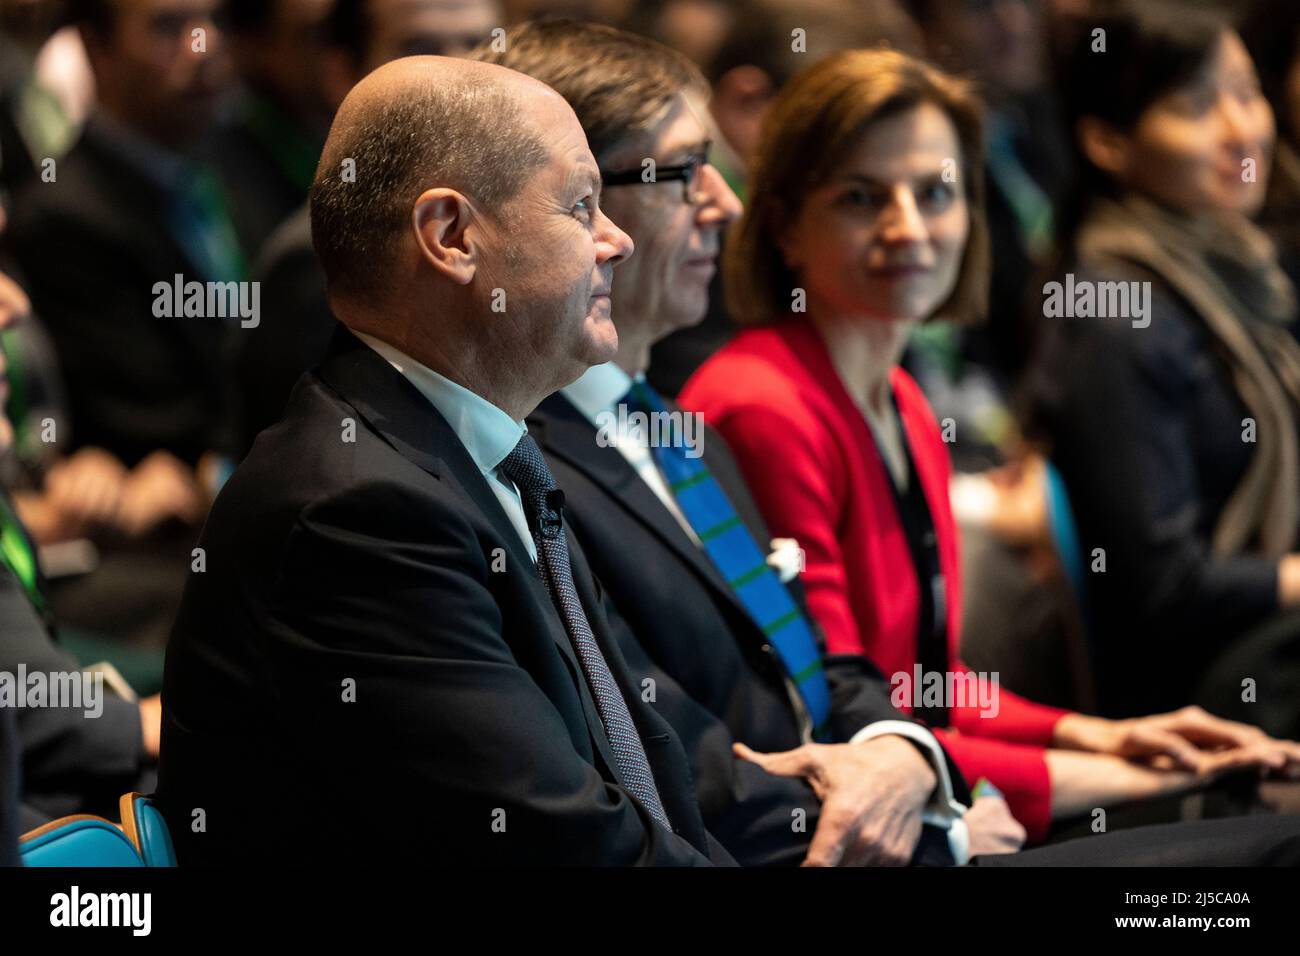 Bundeskanzler Olaf Scholz in London, Februar 2019 Foto von David Levenson/Alamy Stockfoto